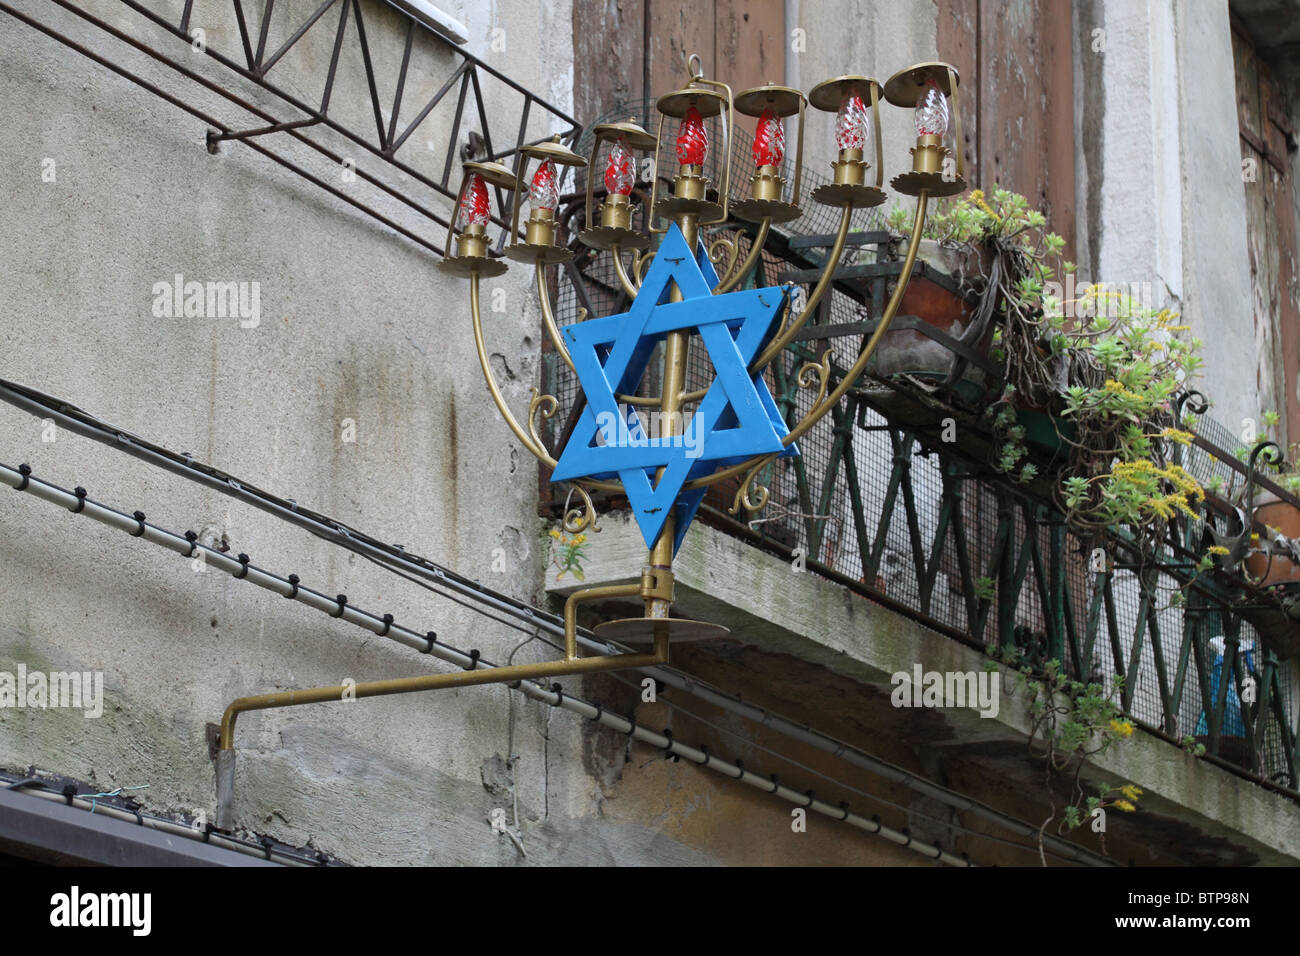 Jewish Menorah lights with Star of David sign in Venice's Jewish quarter Stock Photo